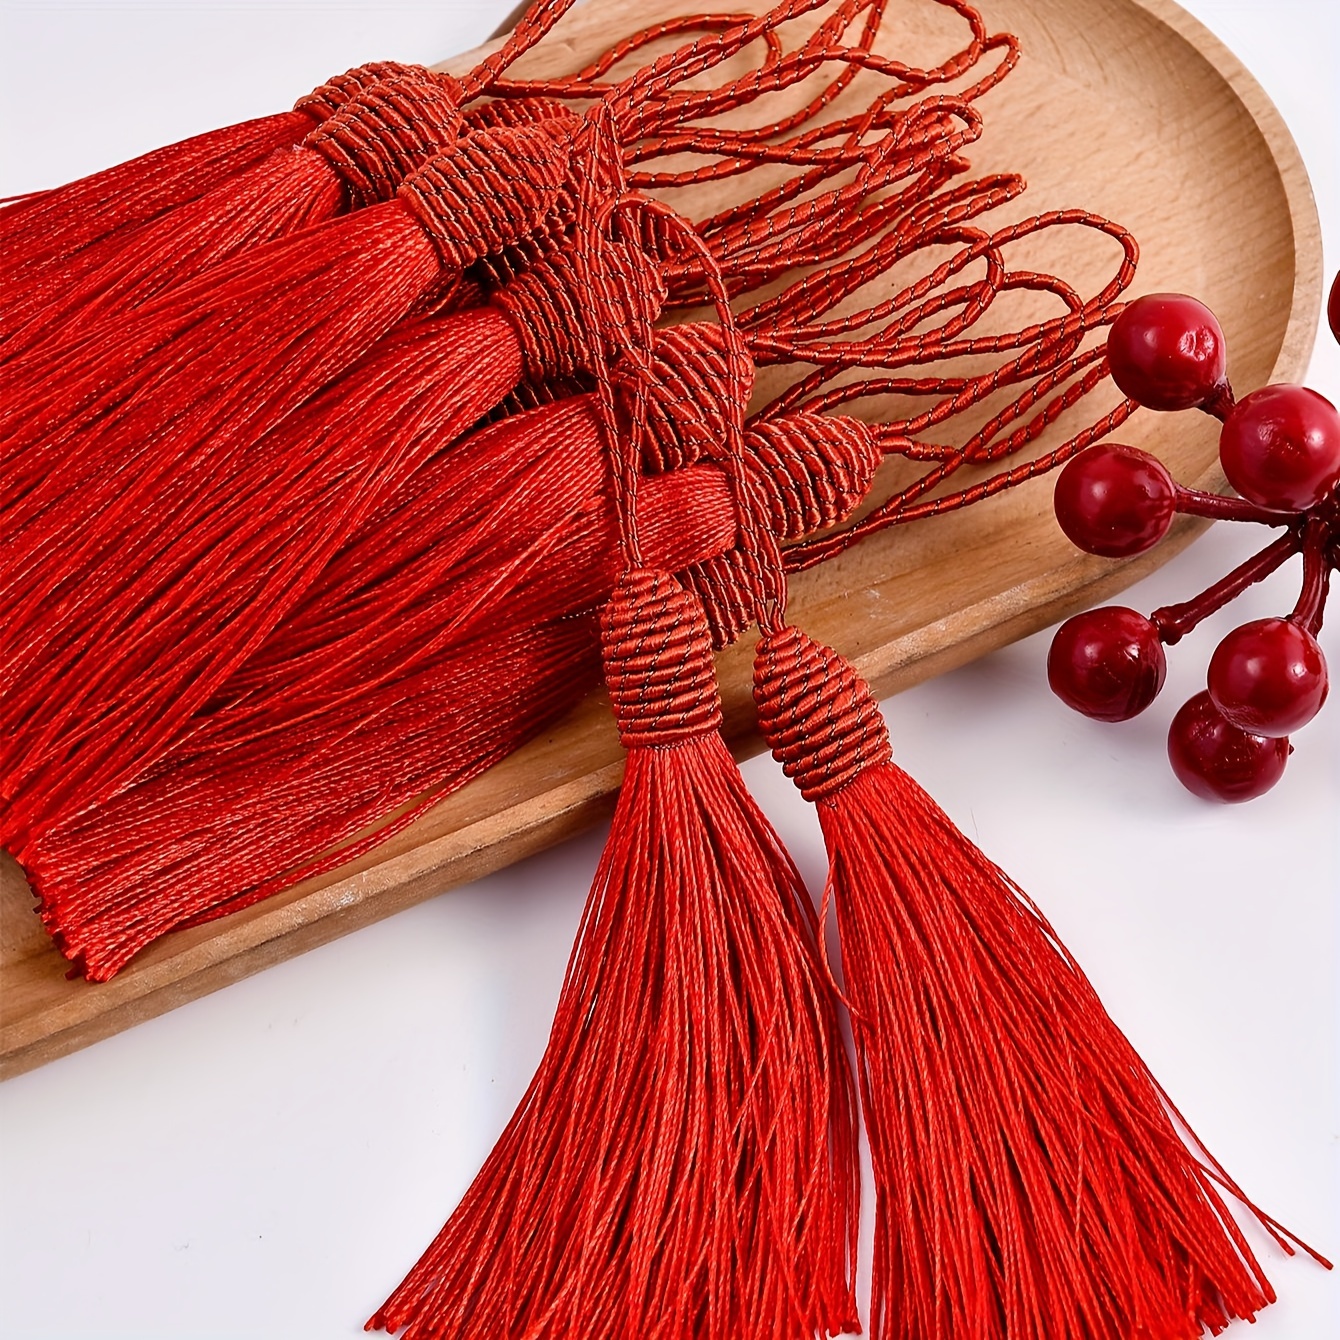 10 Silky Red Tassels, Tassels for Jewelry, Accessories